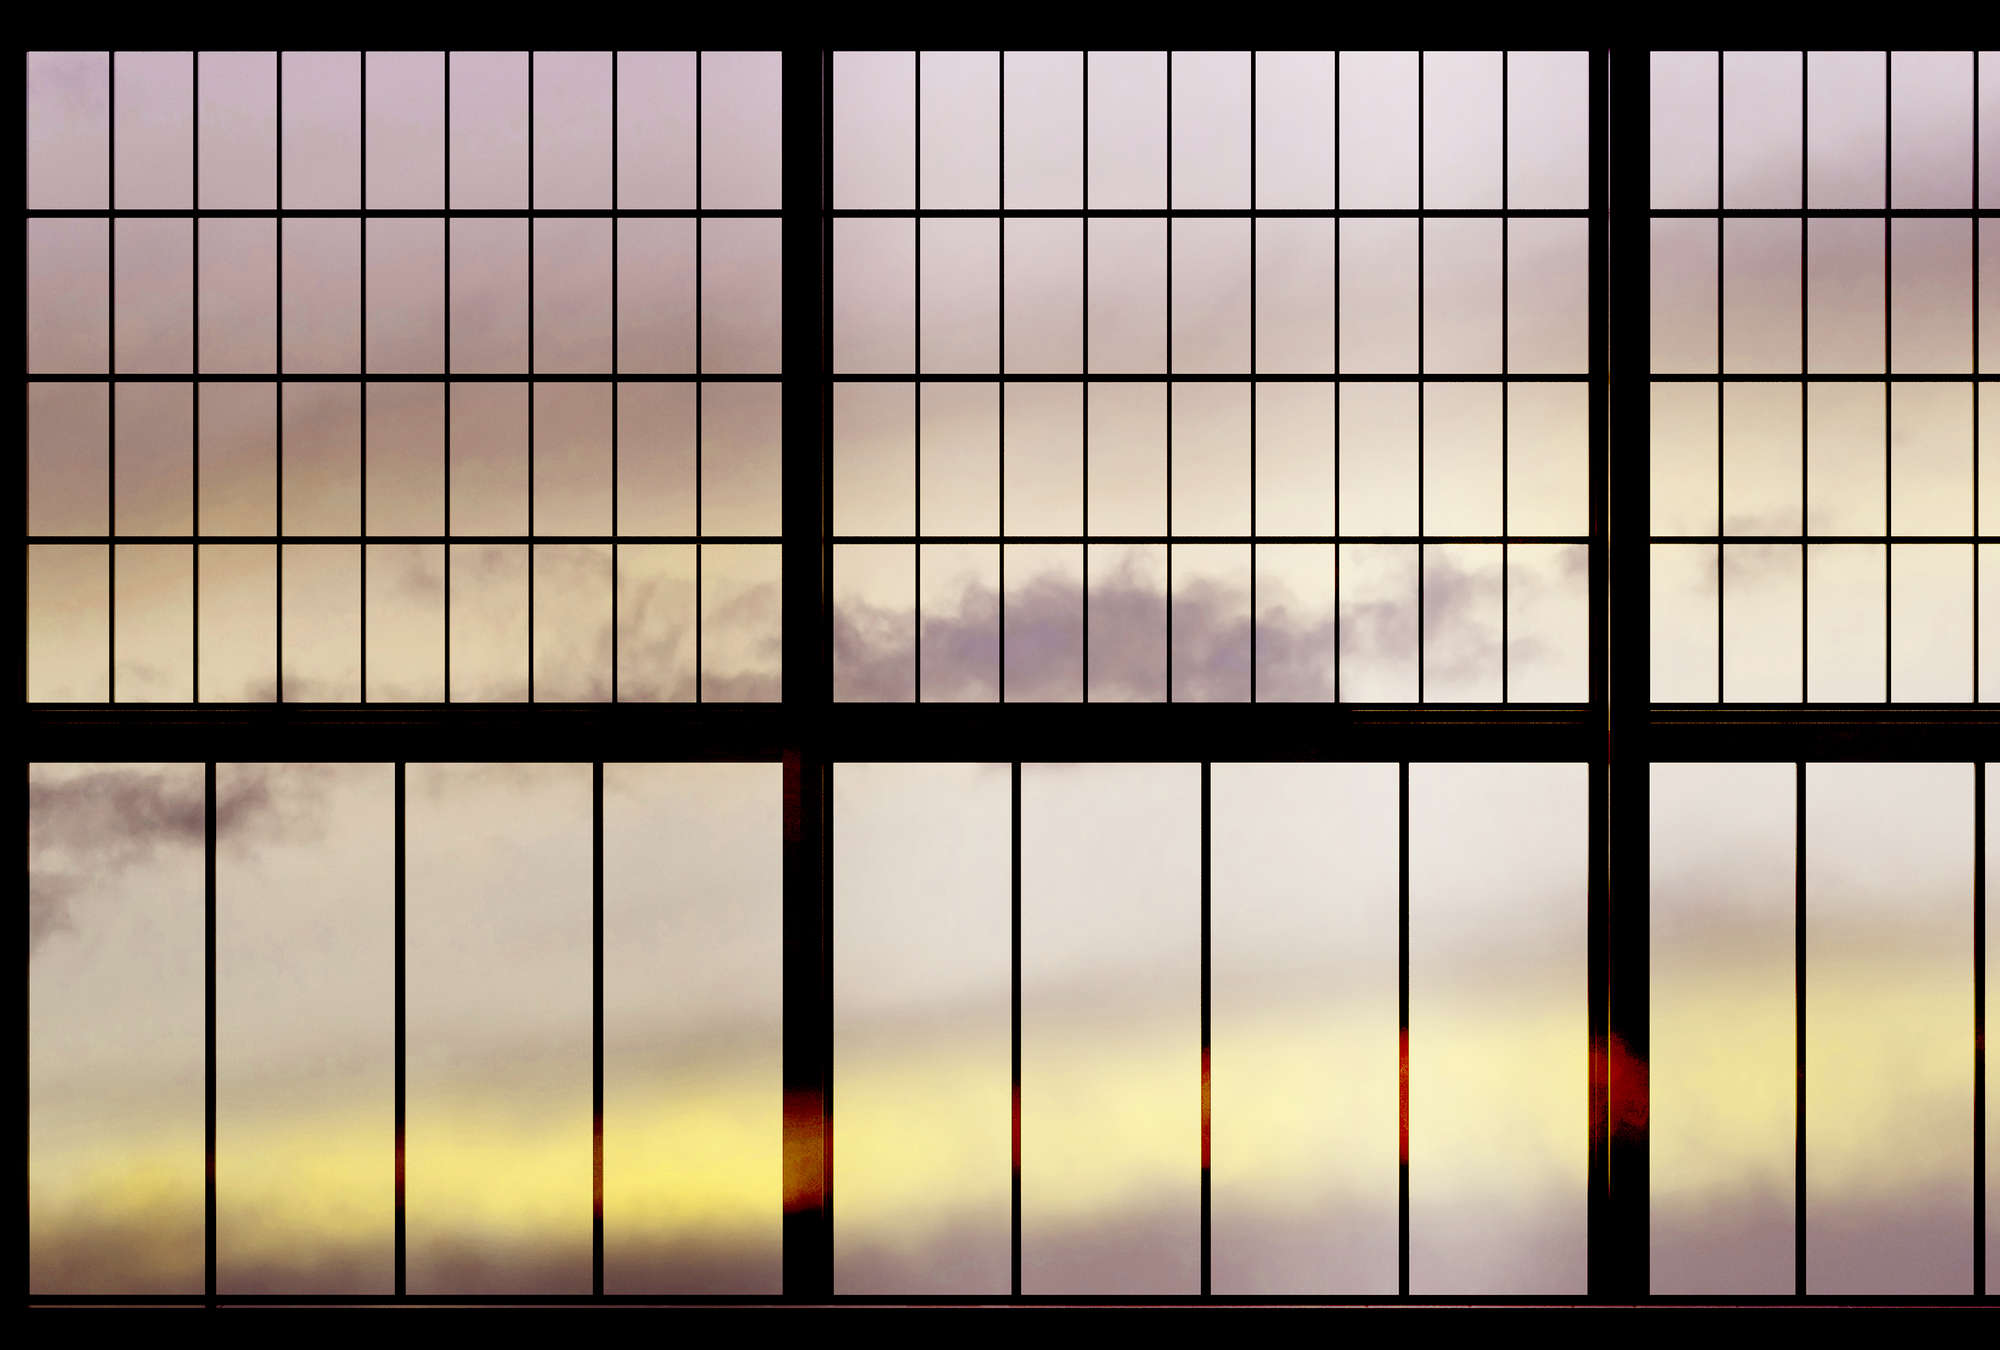             Sky 2 - Fotomural Window View Sunrise - Amarillo, Negro | Perla de lana suave
        